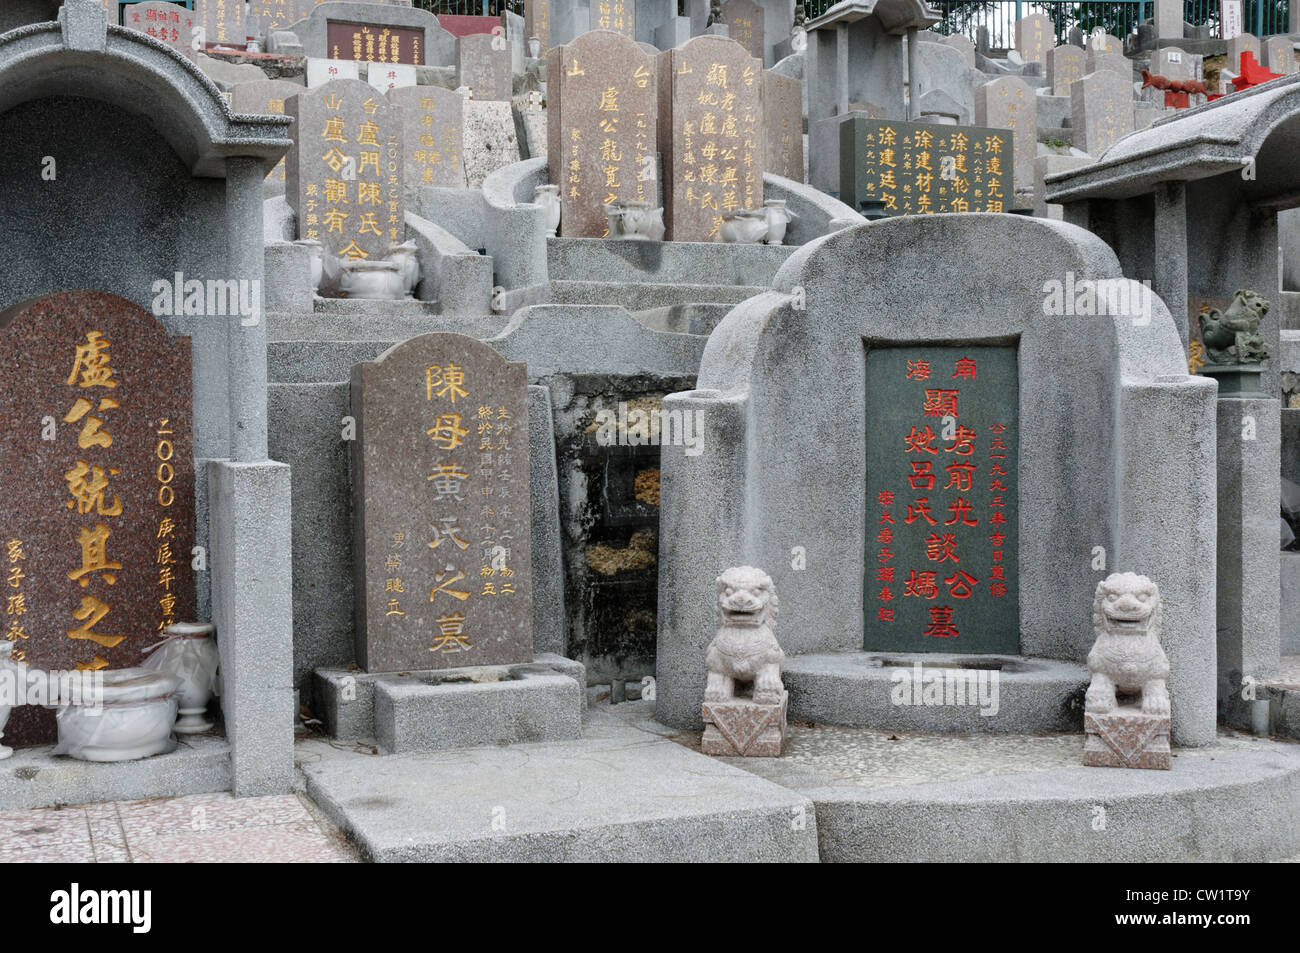 A graveyard in Hong Kong Stock Photo